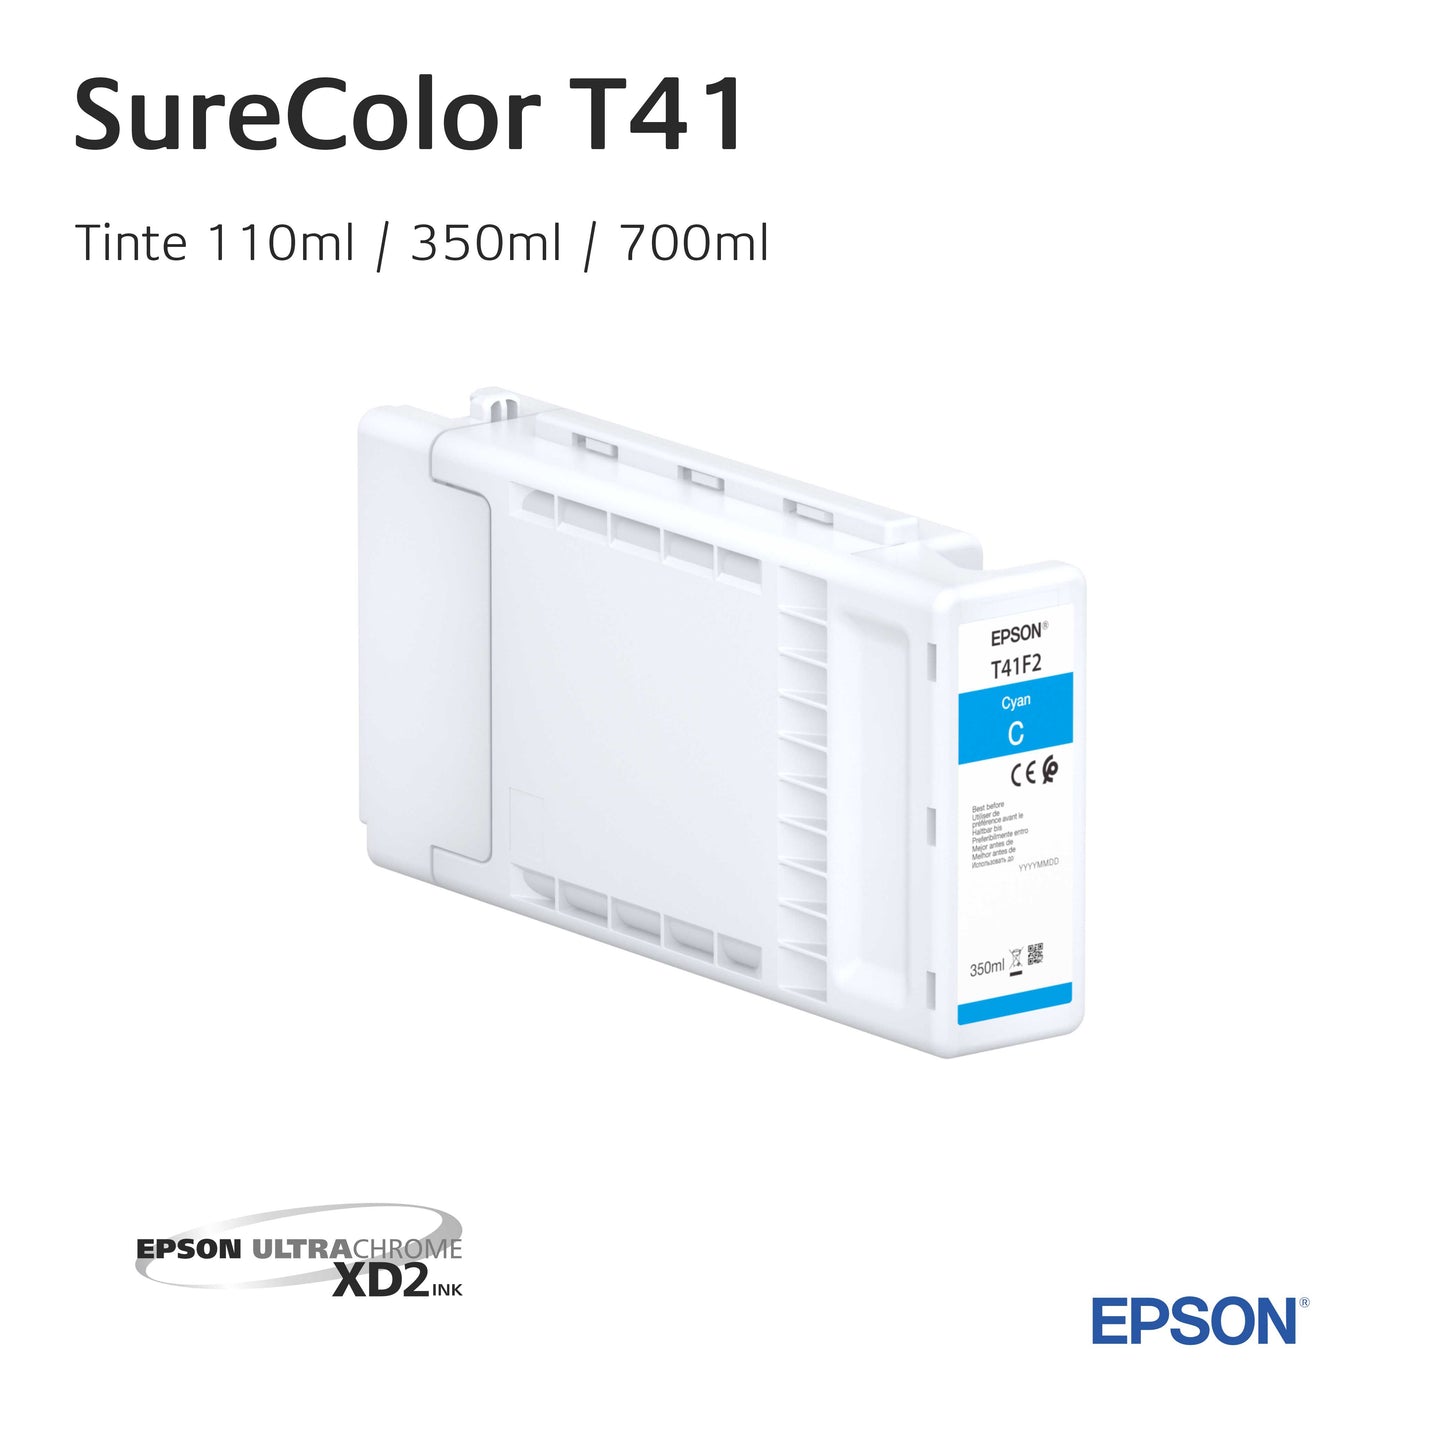 Epson SureColor T41 - Tinte